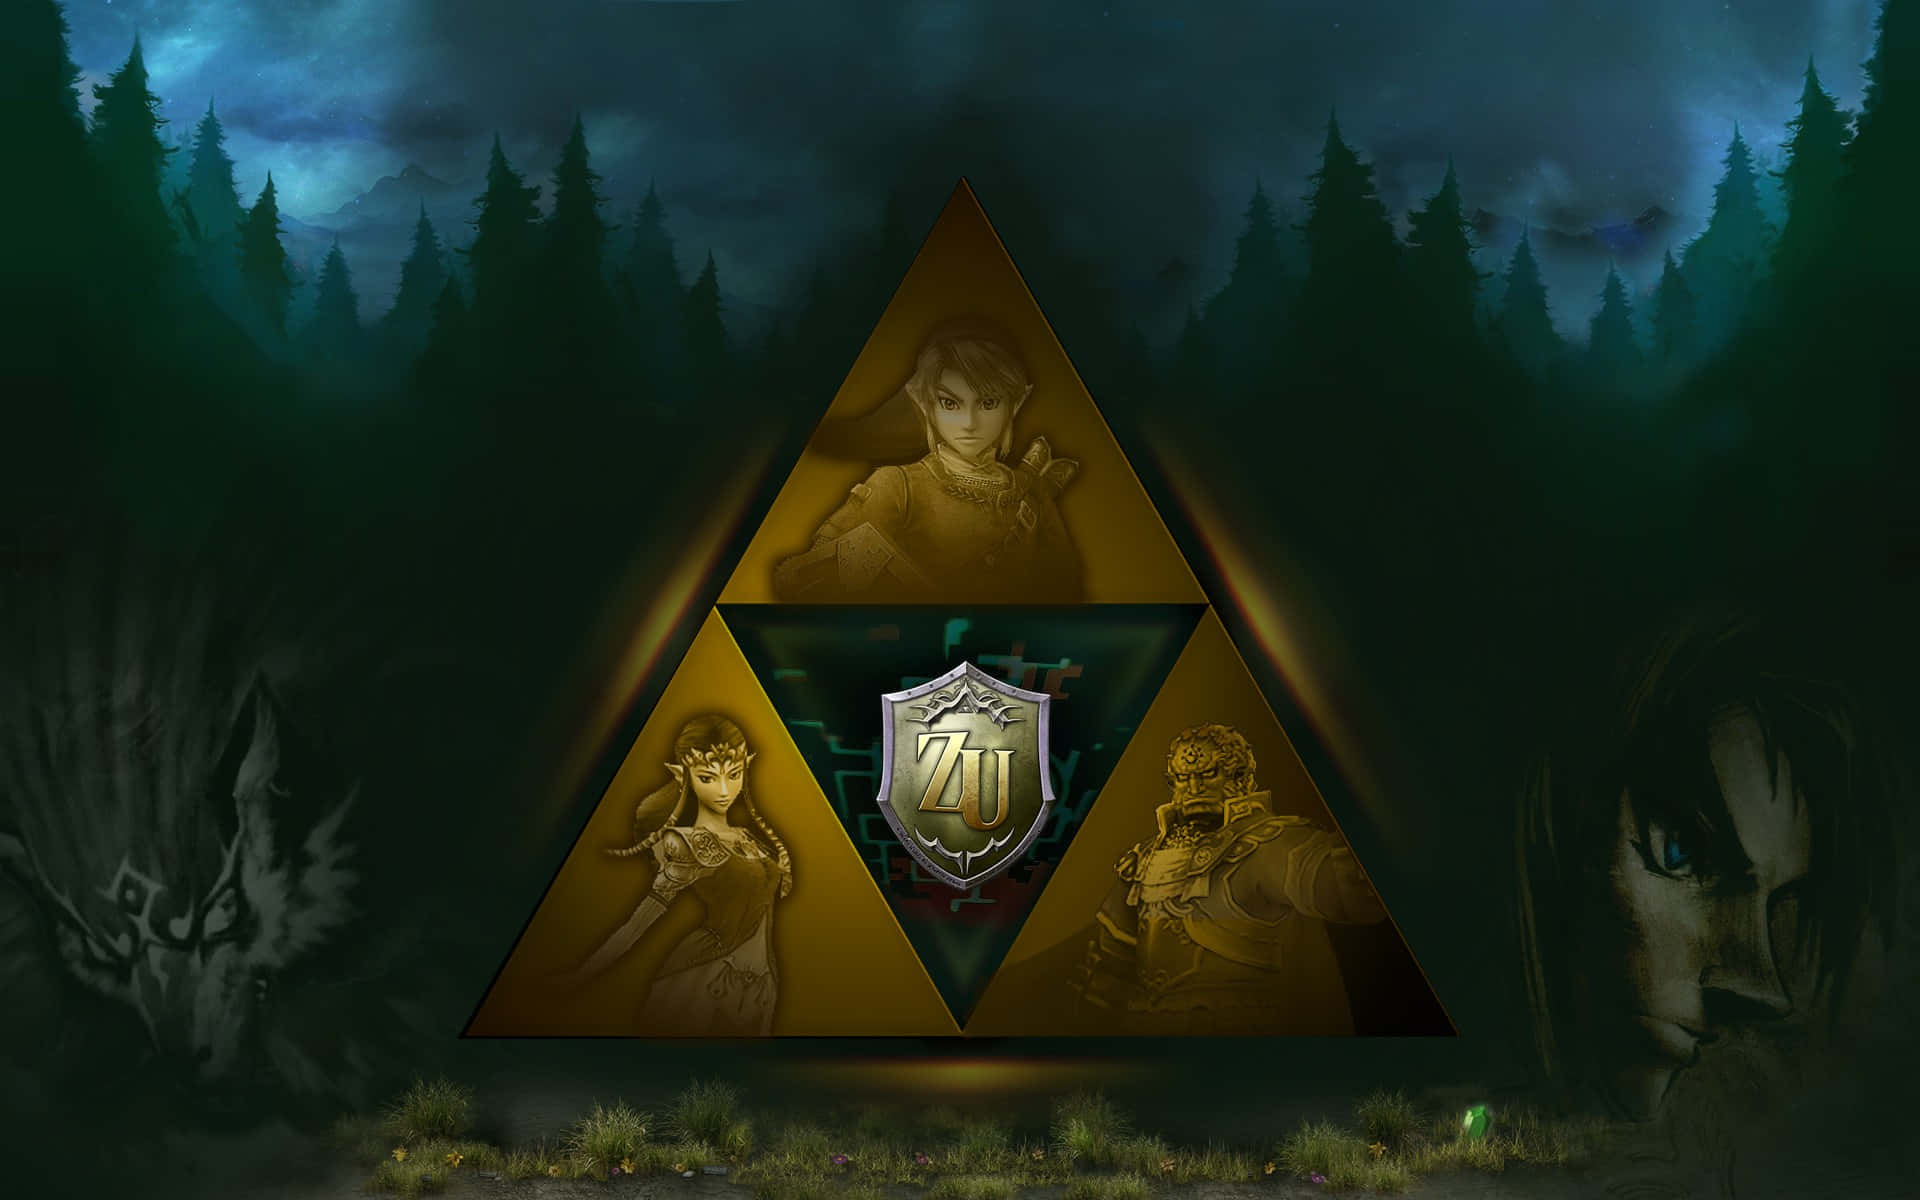 Bildden Ikoniska Triforce Från The Legend Of Zelda. Wallpaper